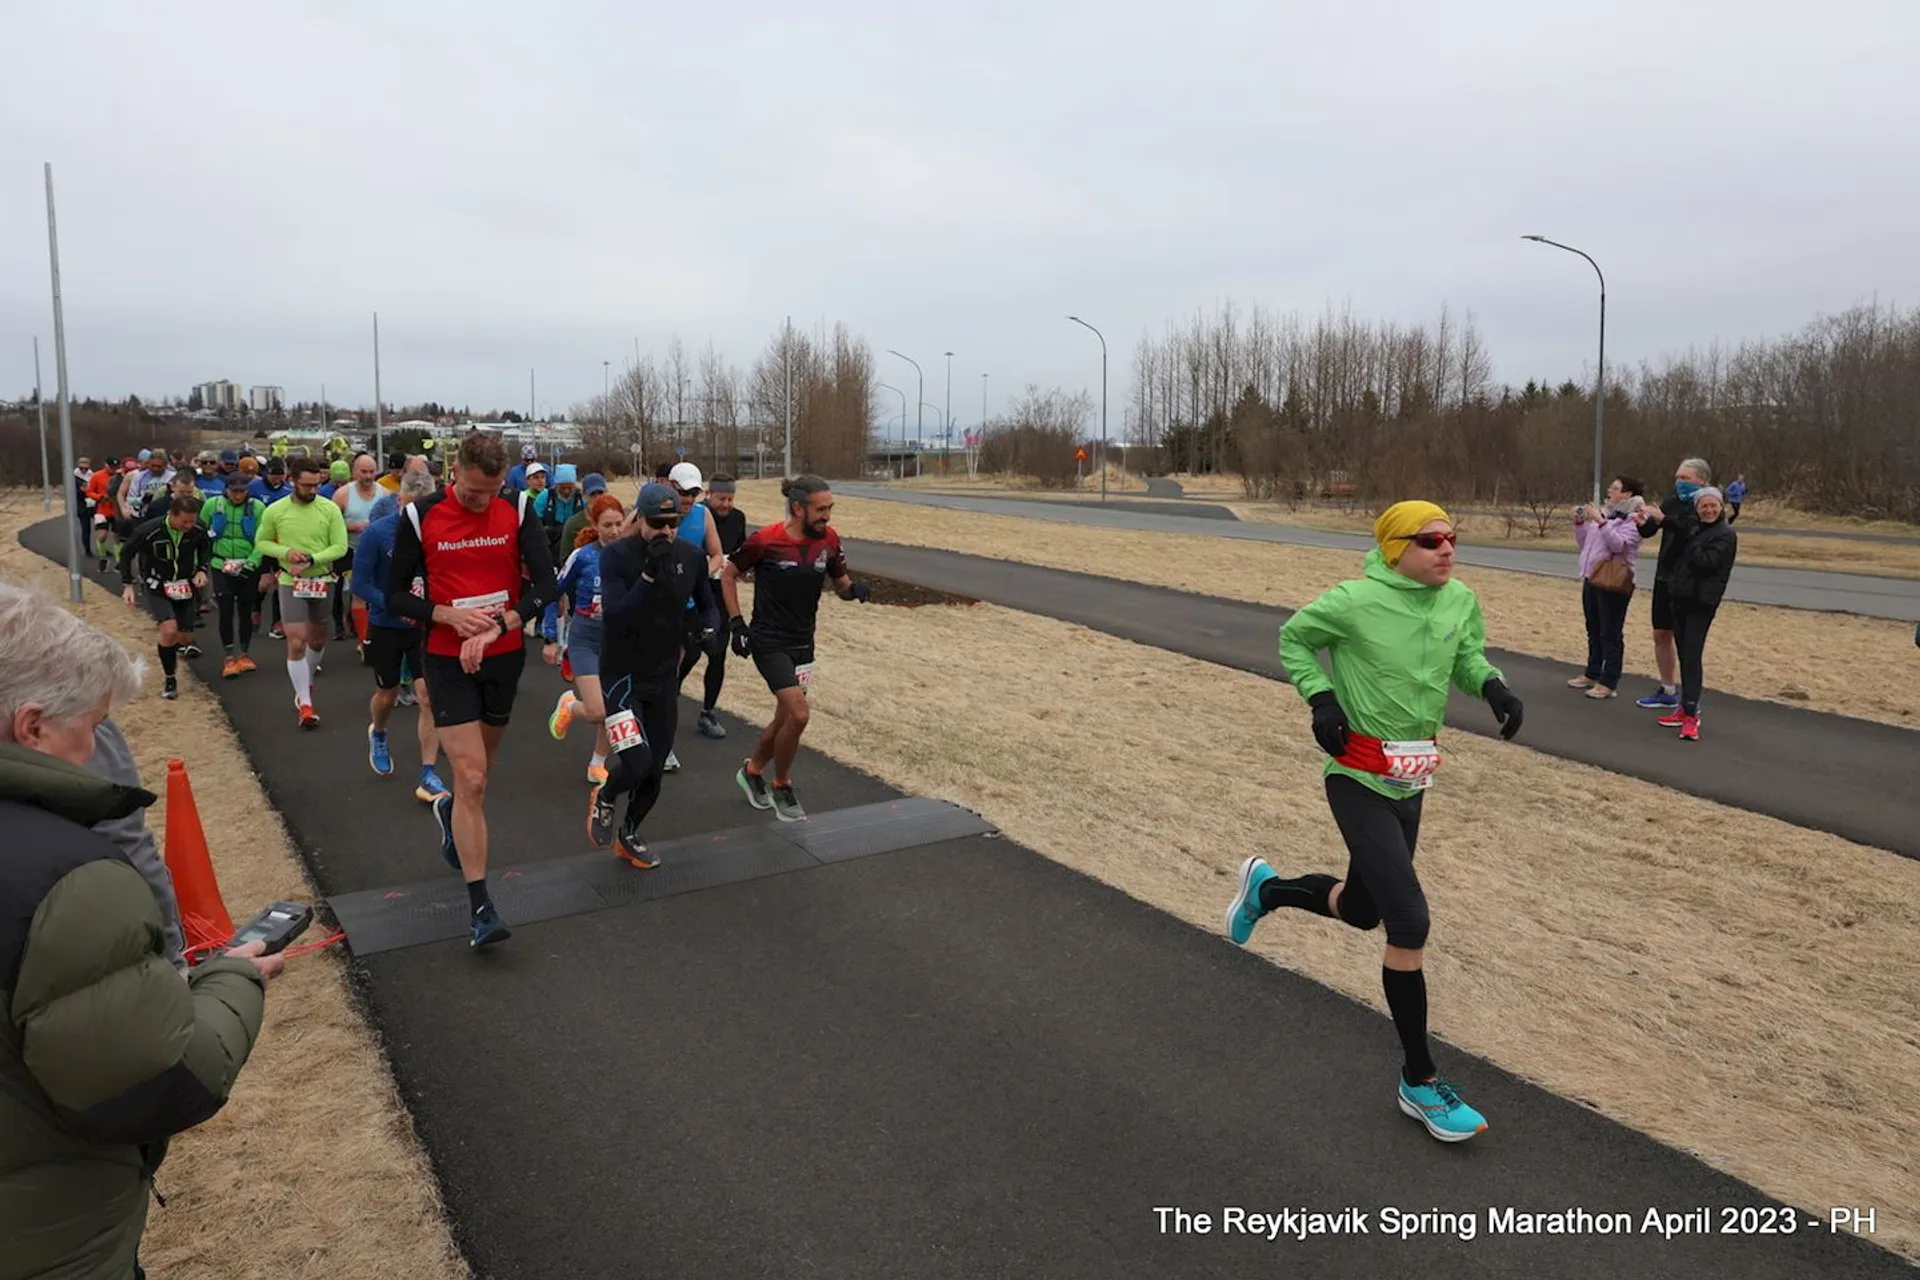 The Reykjavik Spring Marathon